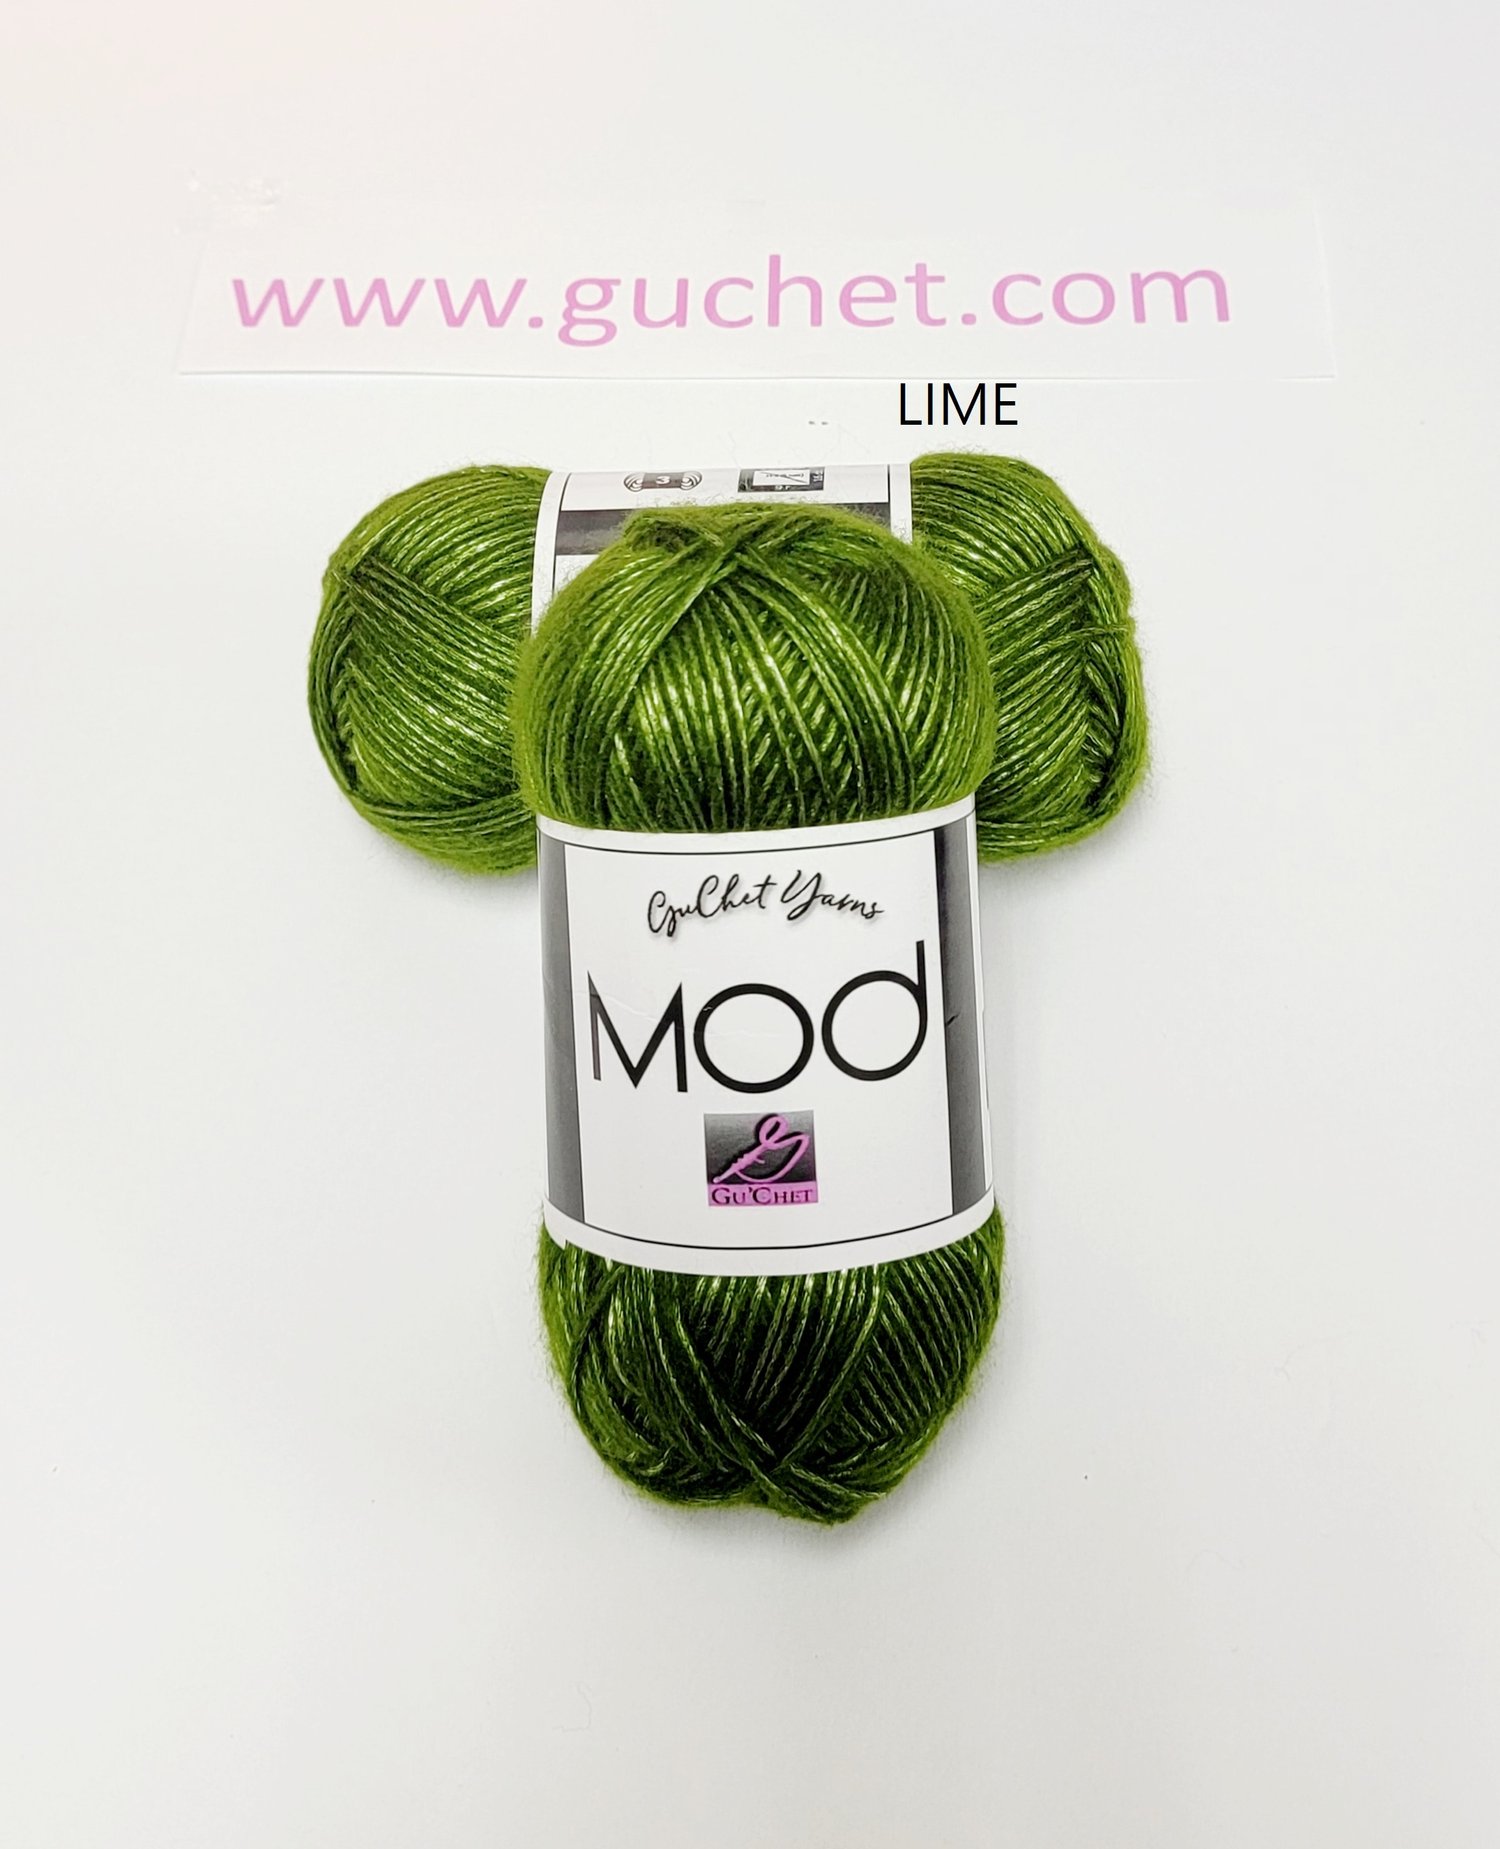 Lime Green - Yarn 1 mm